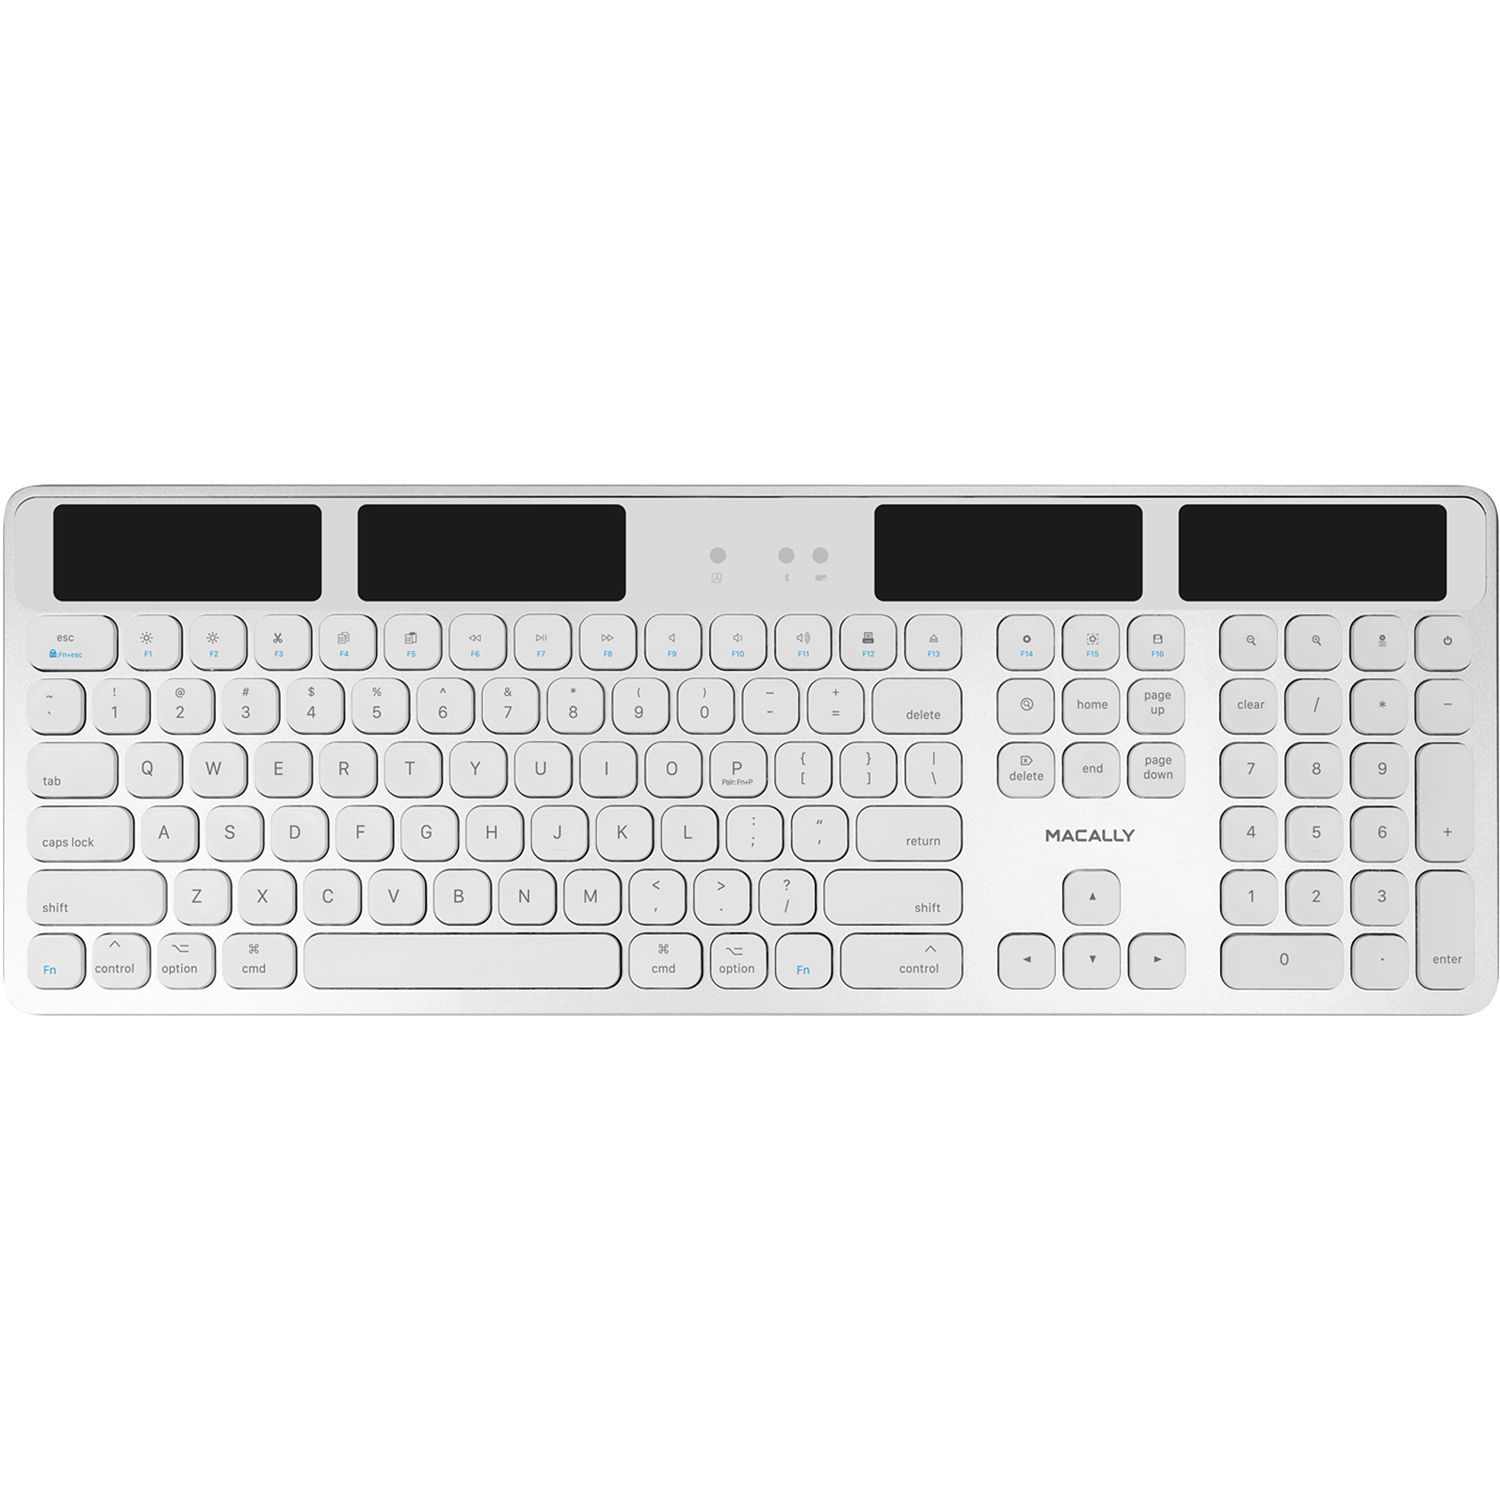 Ergonomic bluetooth keyboards for mac